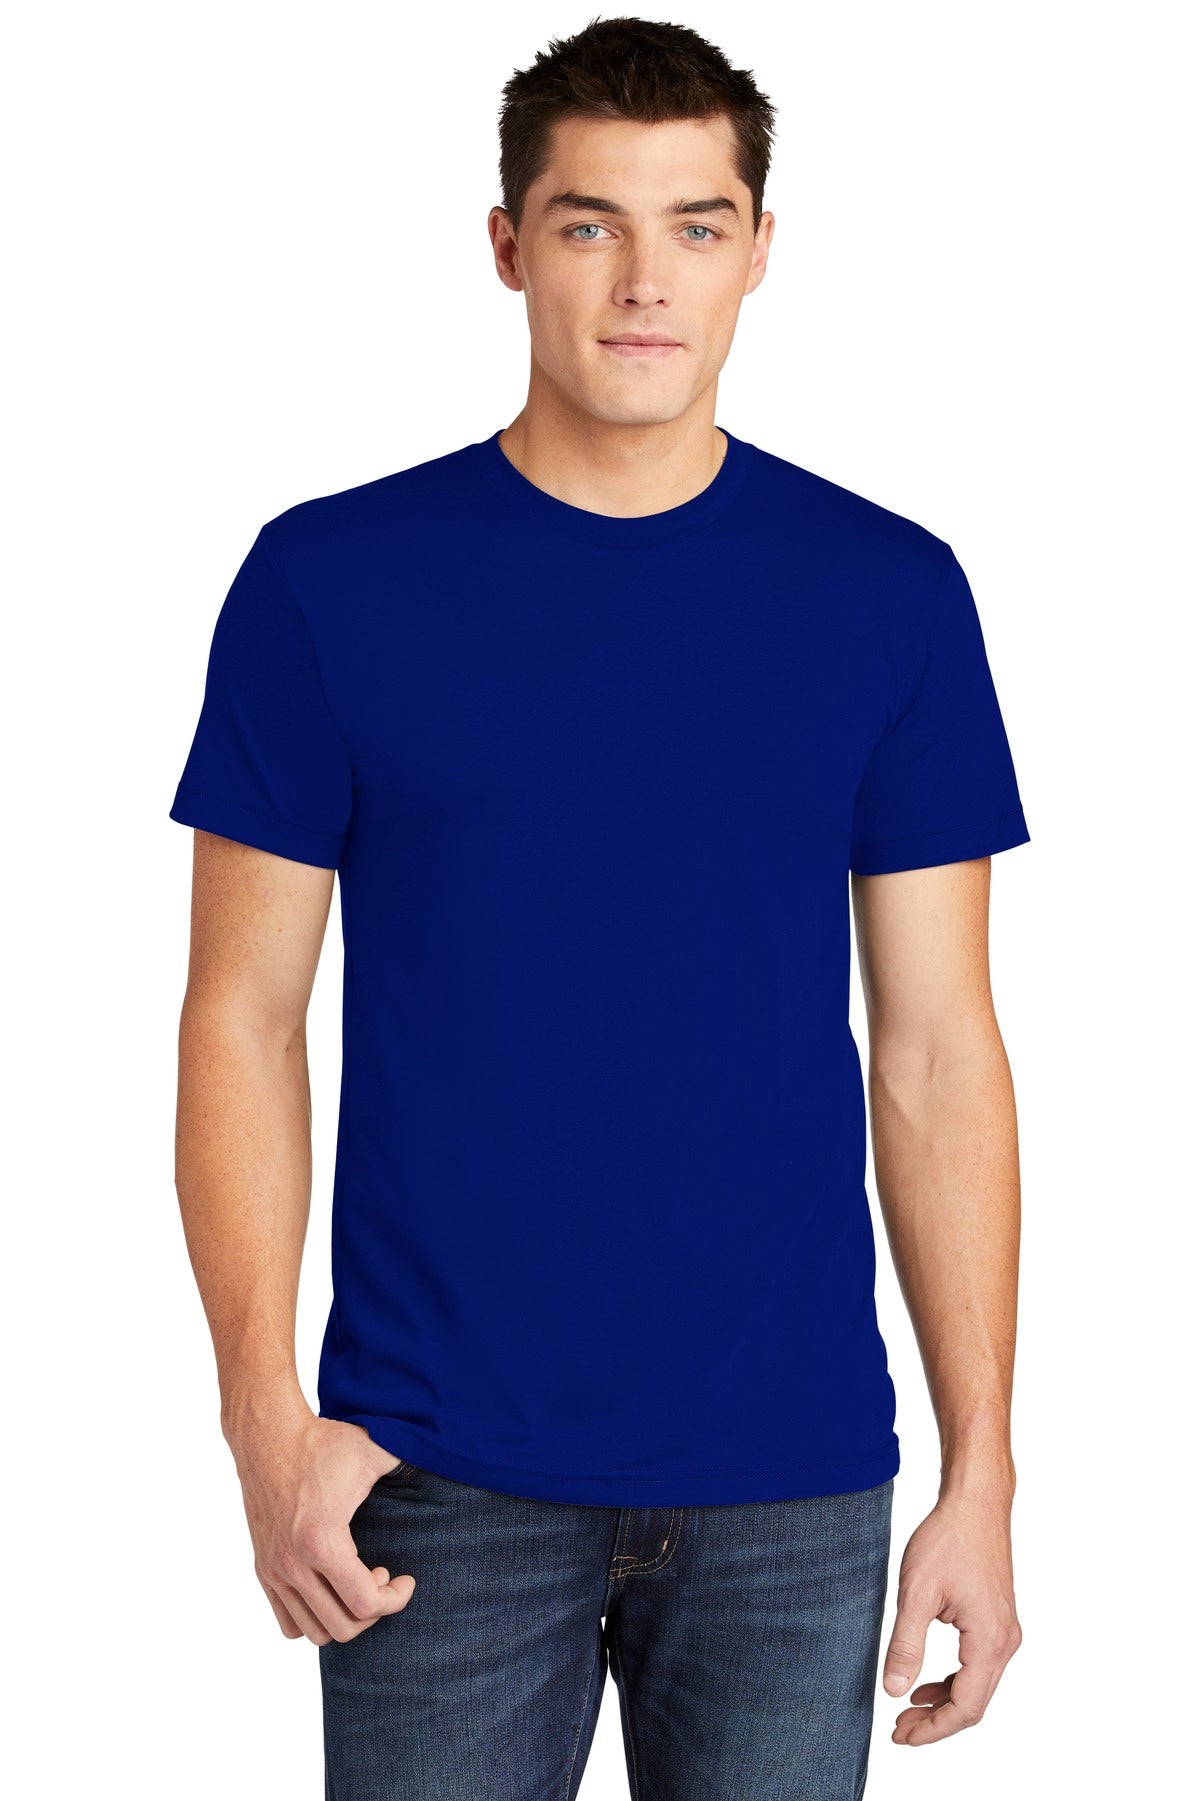 American Apparel ® Poly-Cotton T-Shirt. BB401W [Lapis] - DFW Impression